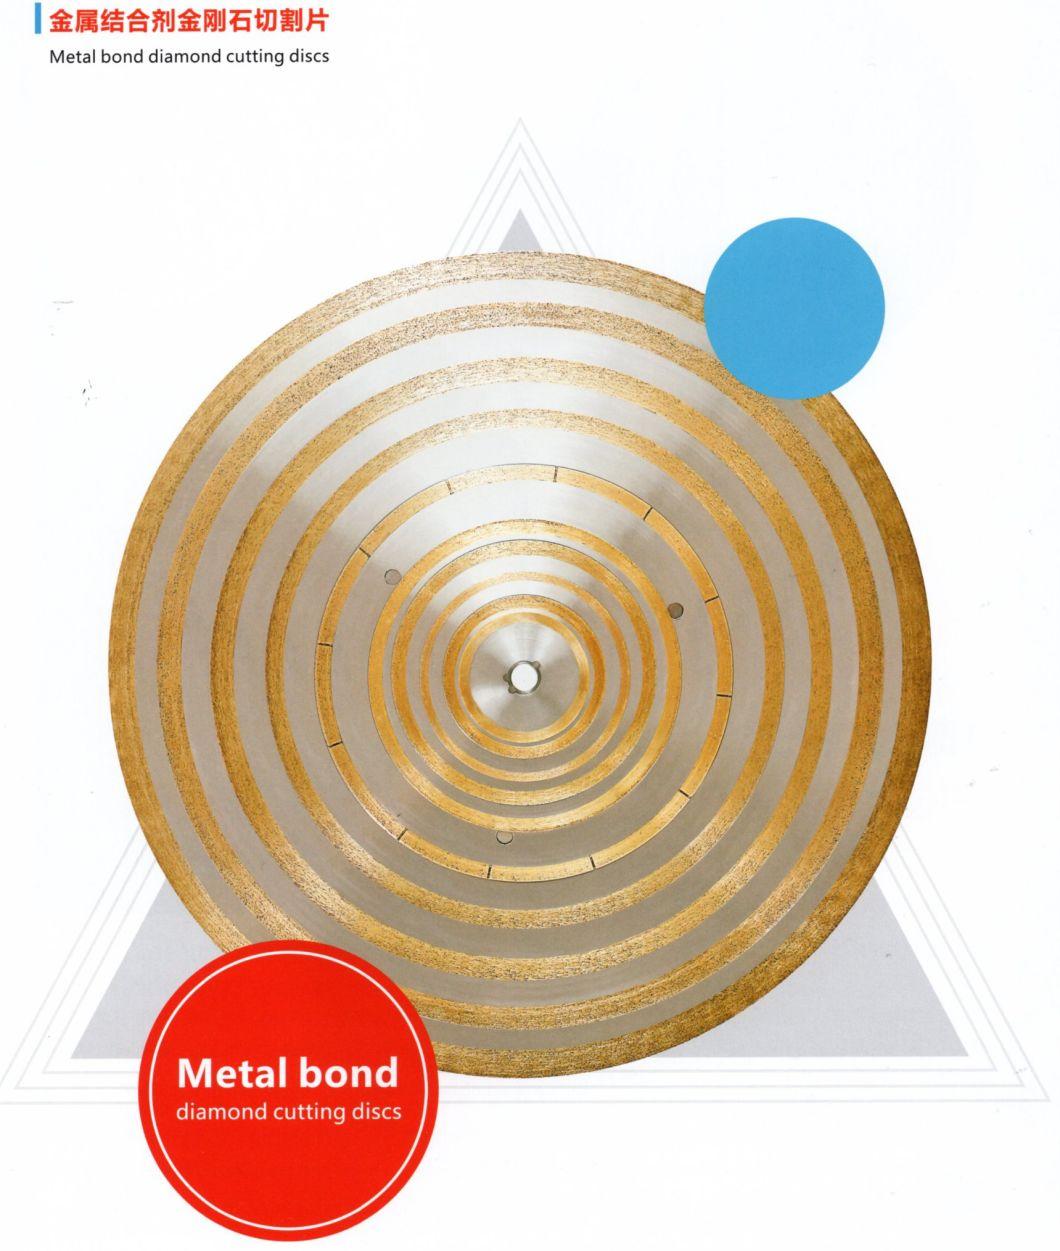 Metal Bonded Diamond Cutting Disc for Fuse Glass Tube and Quartz Tube